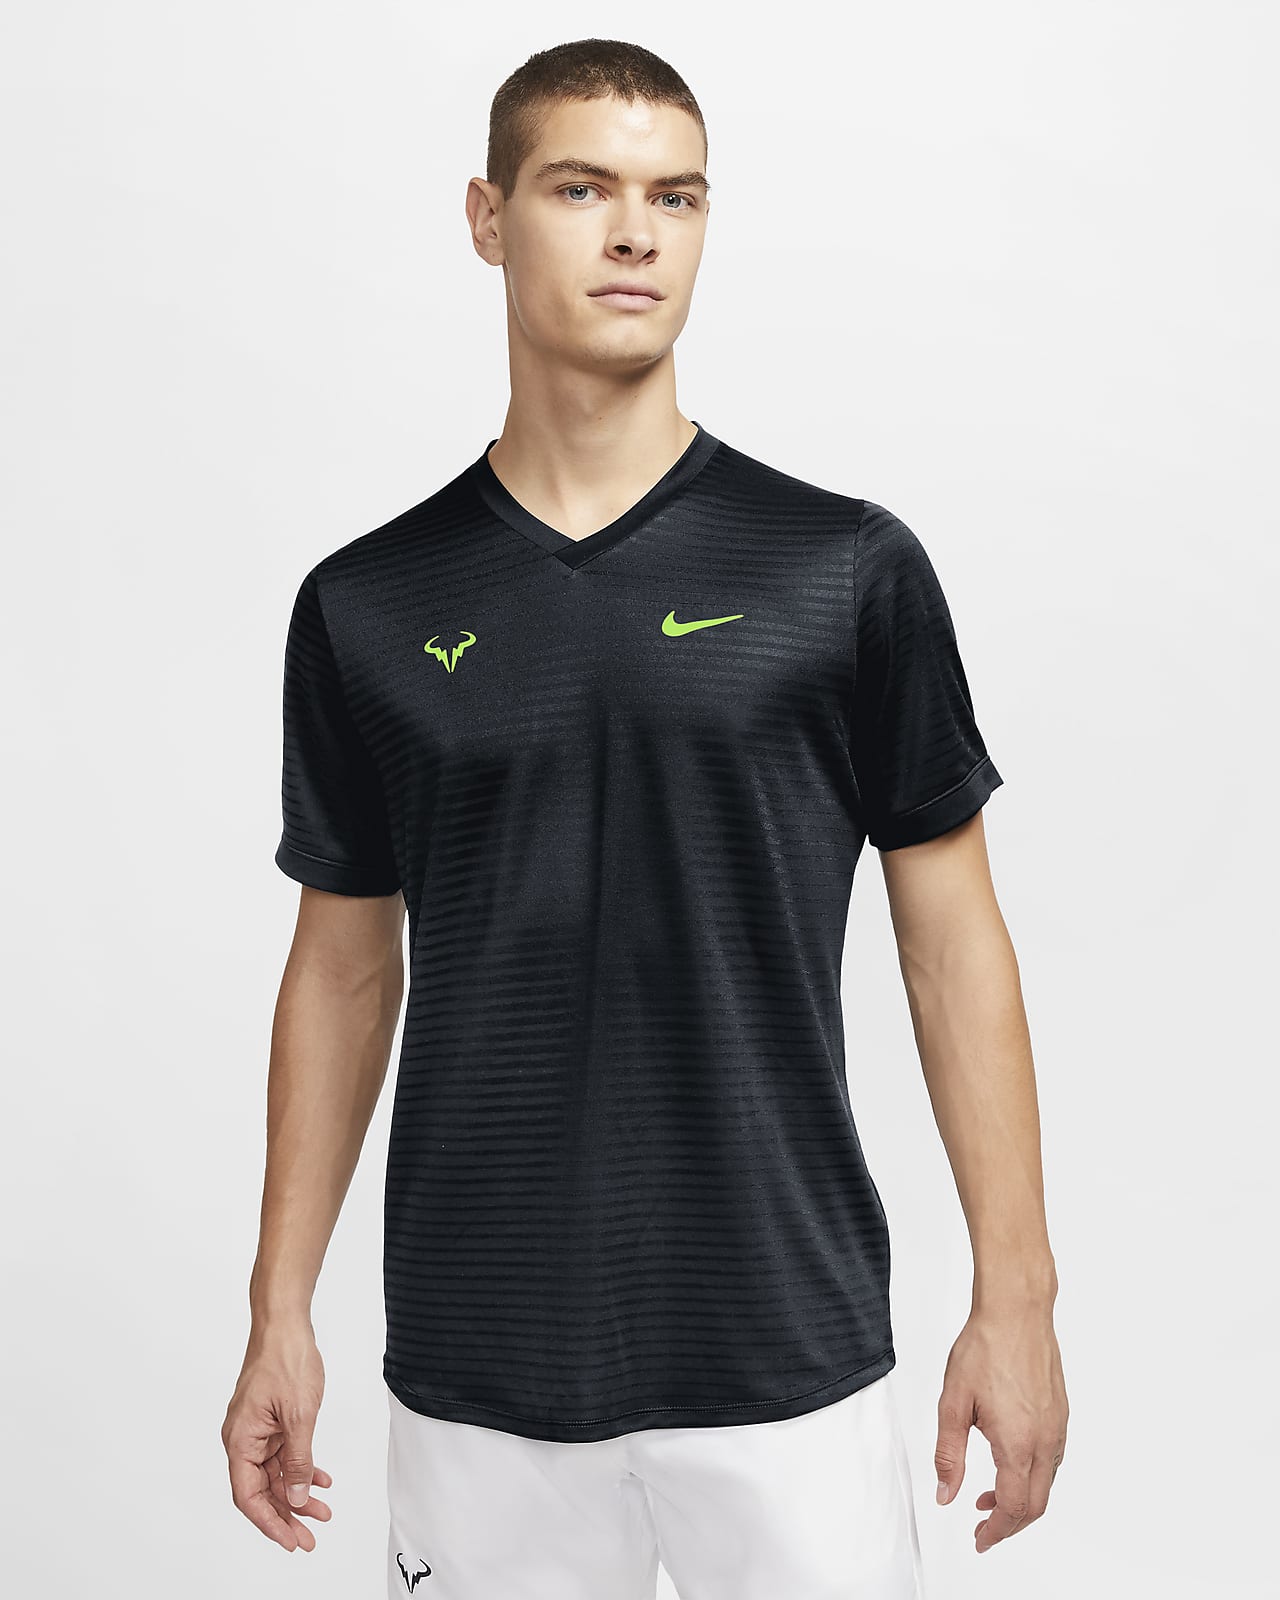 Short-Sleeve Tennis Top. Nike SG